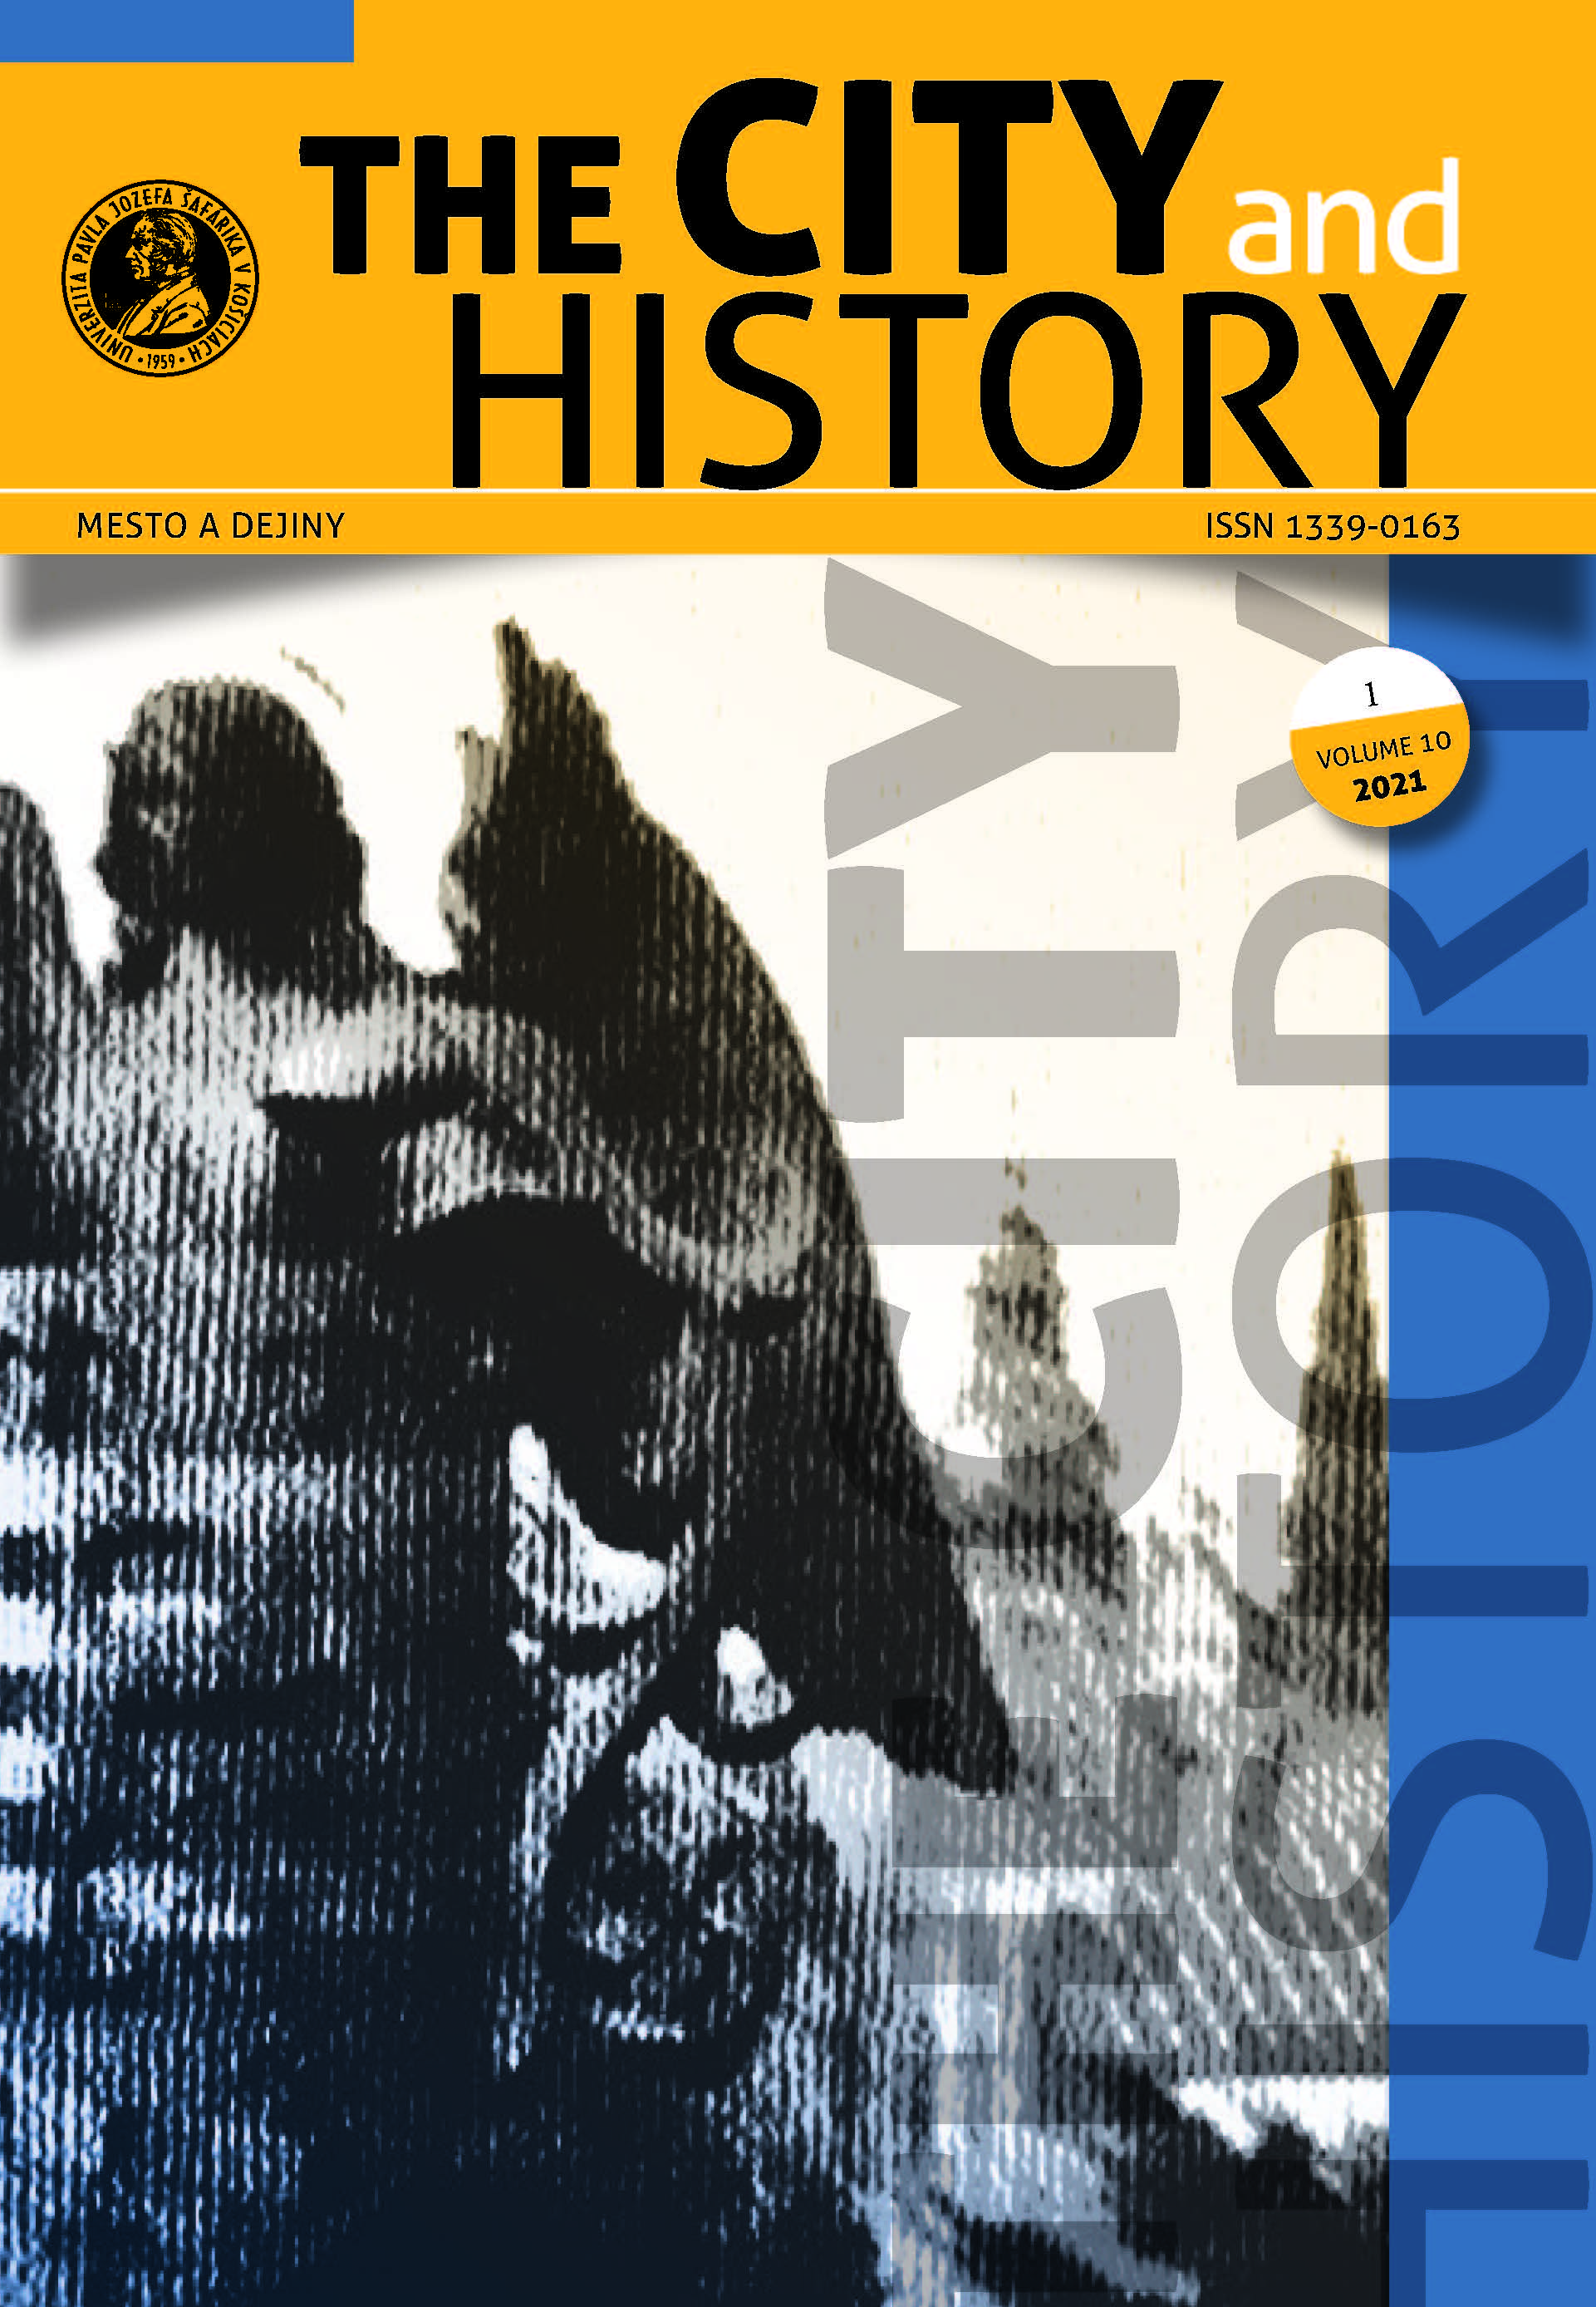 STRATIGAKOS, Despina. Hitler’s Northern Utopia. Building the New Order in Occupied Norway. Princeton; Oxford: Princeton University Press, 2020, 351 pp. ISBN 978-0-691-21090-2